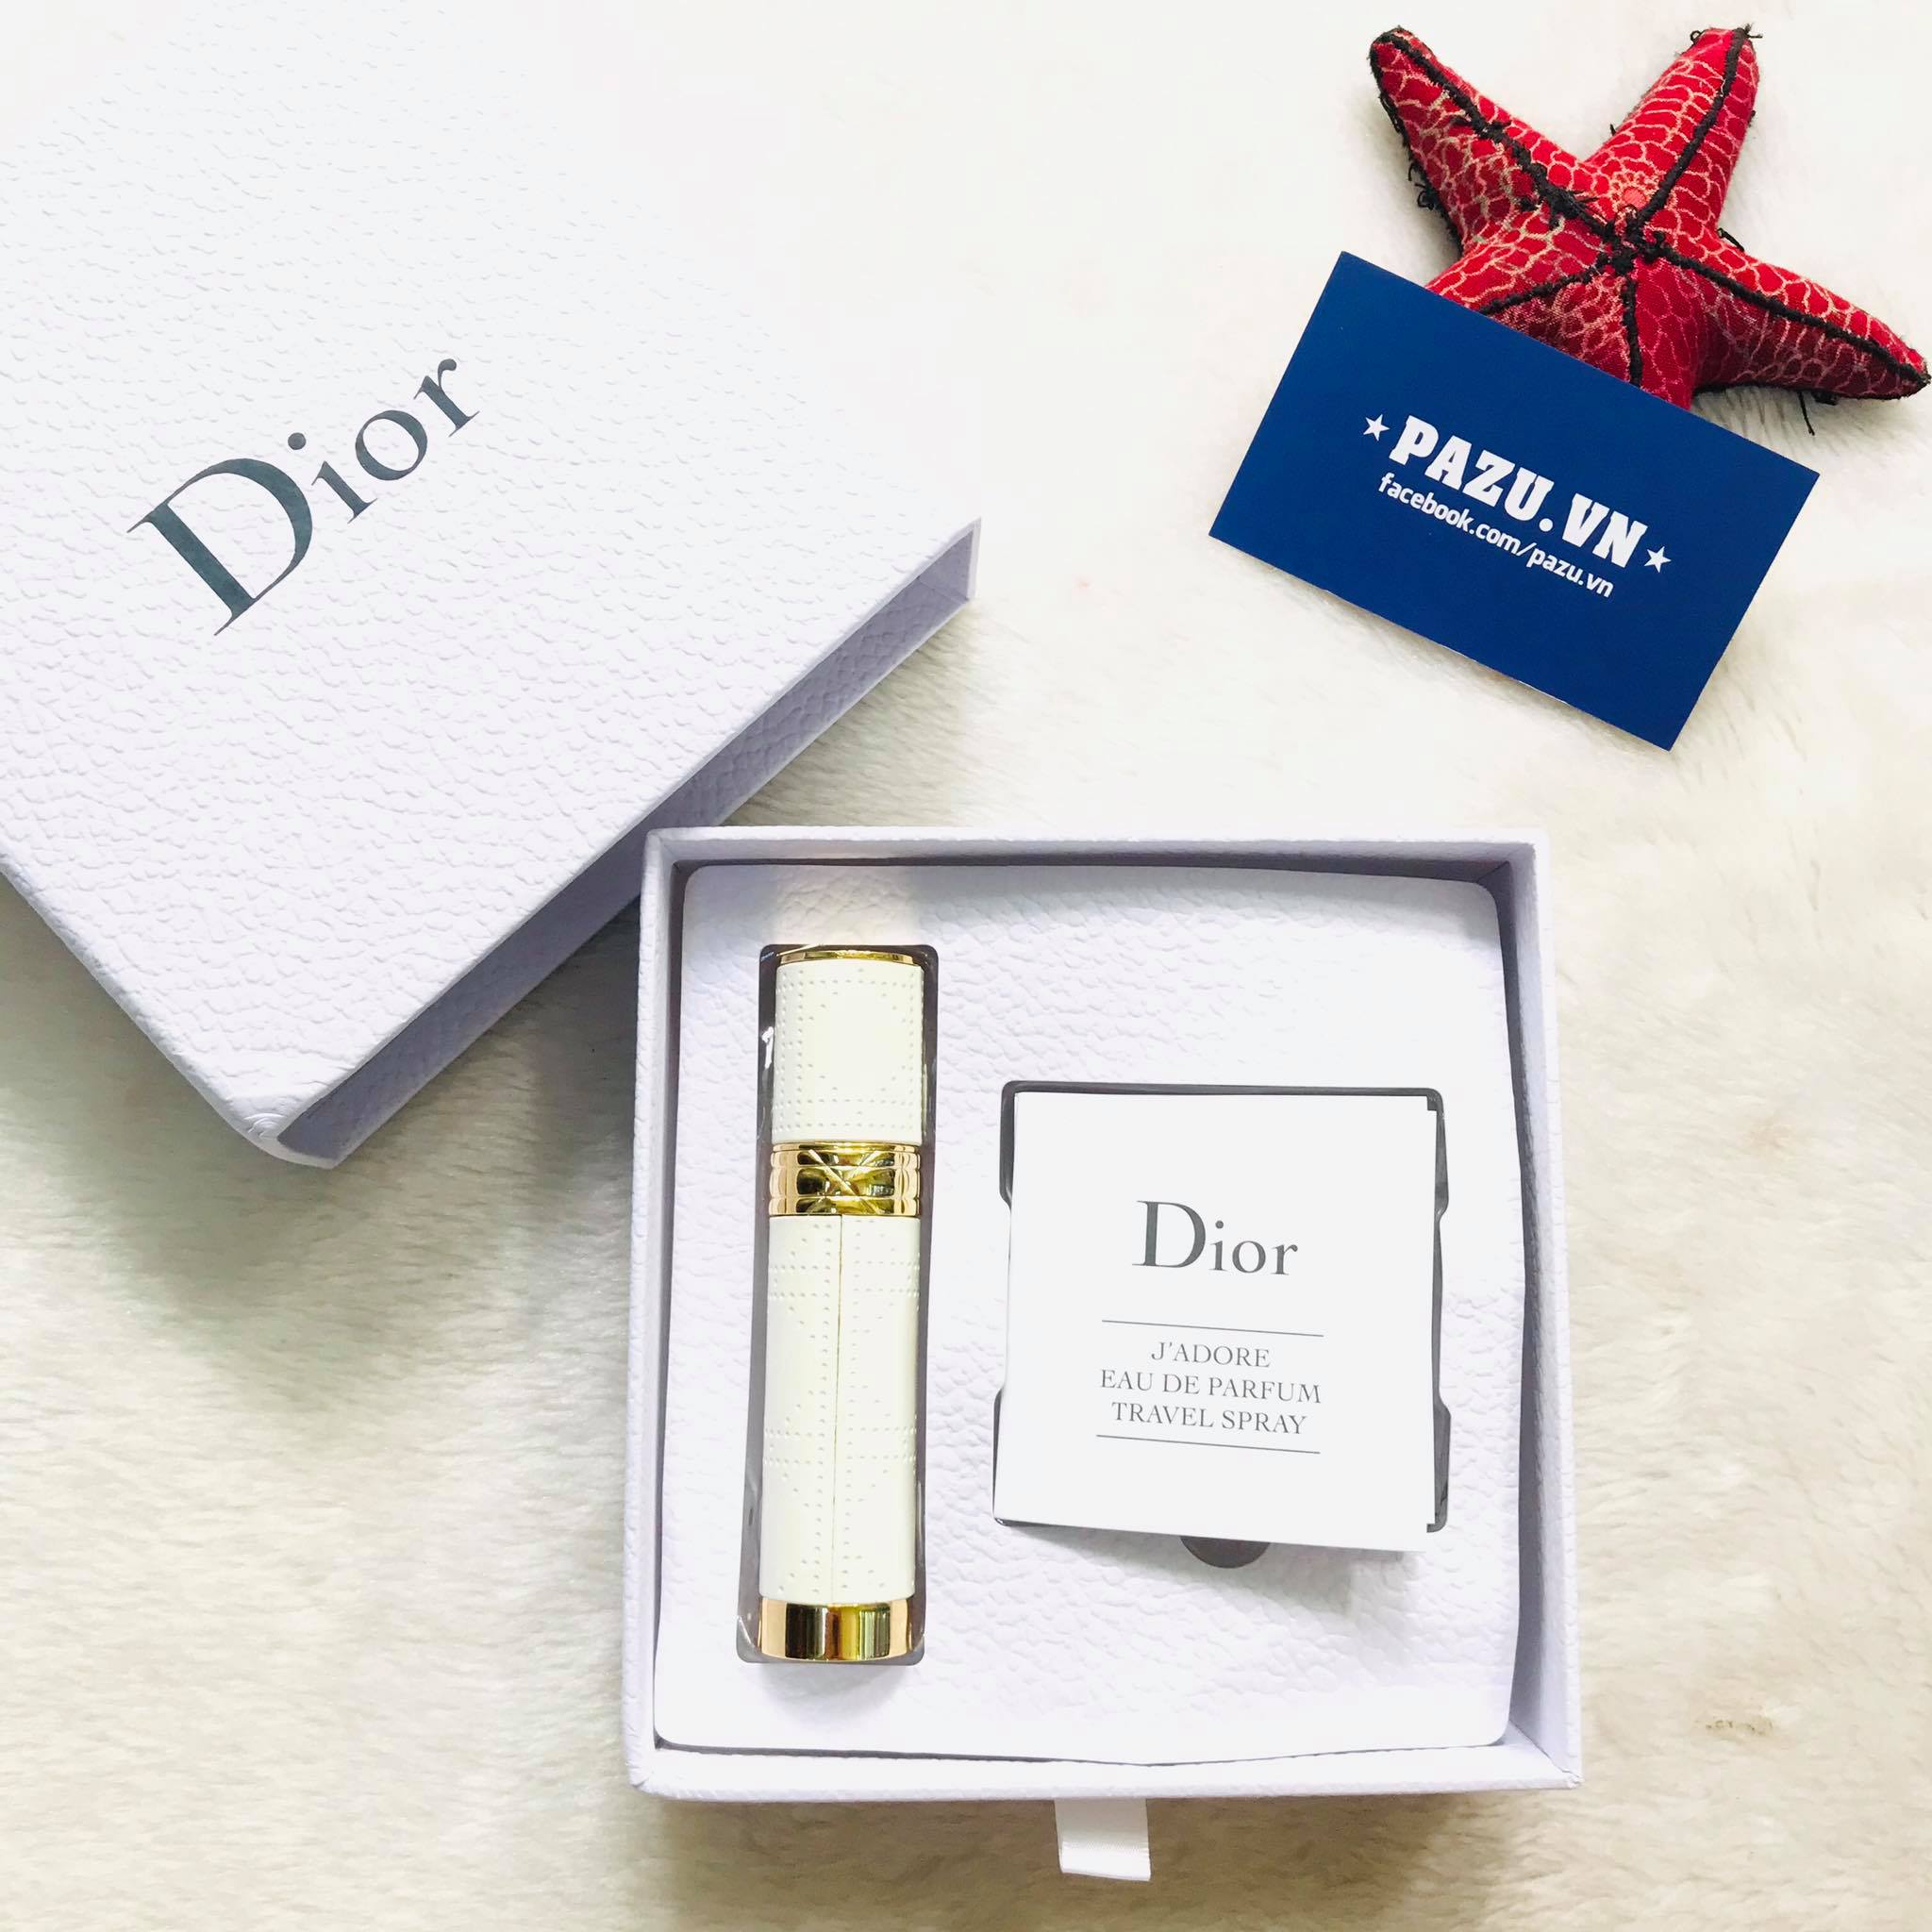 Dior Jadore Mini Set  Wai Wai Cosmetics  Skincare  Facebook